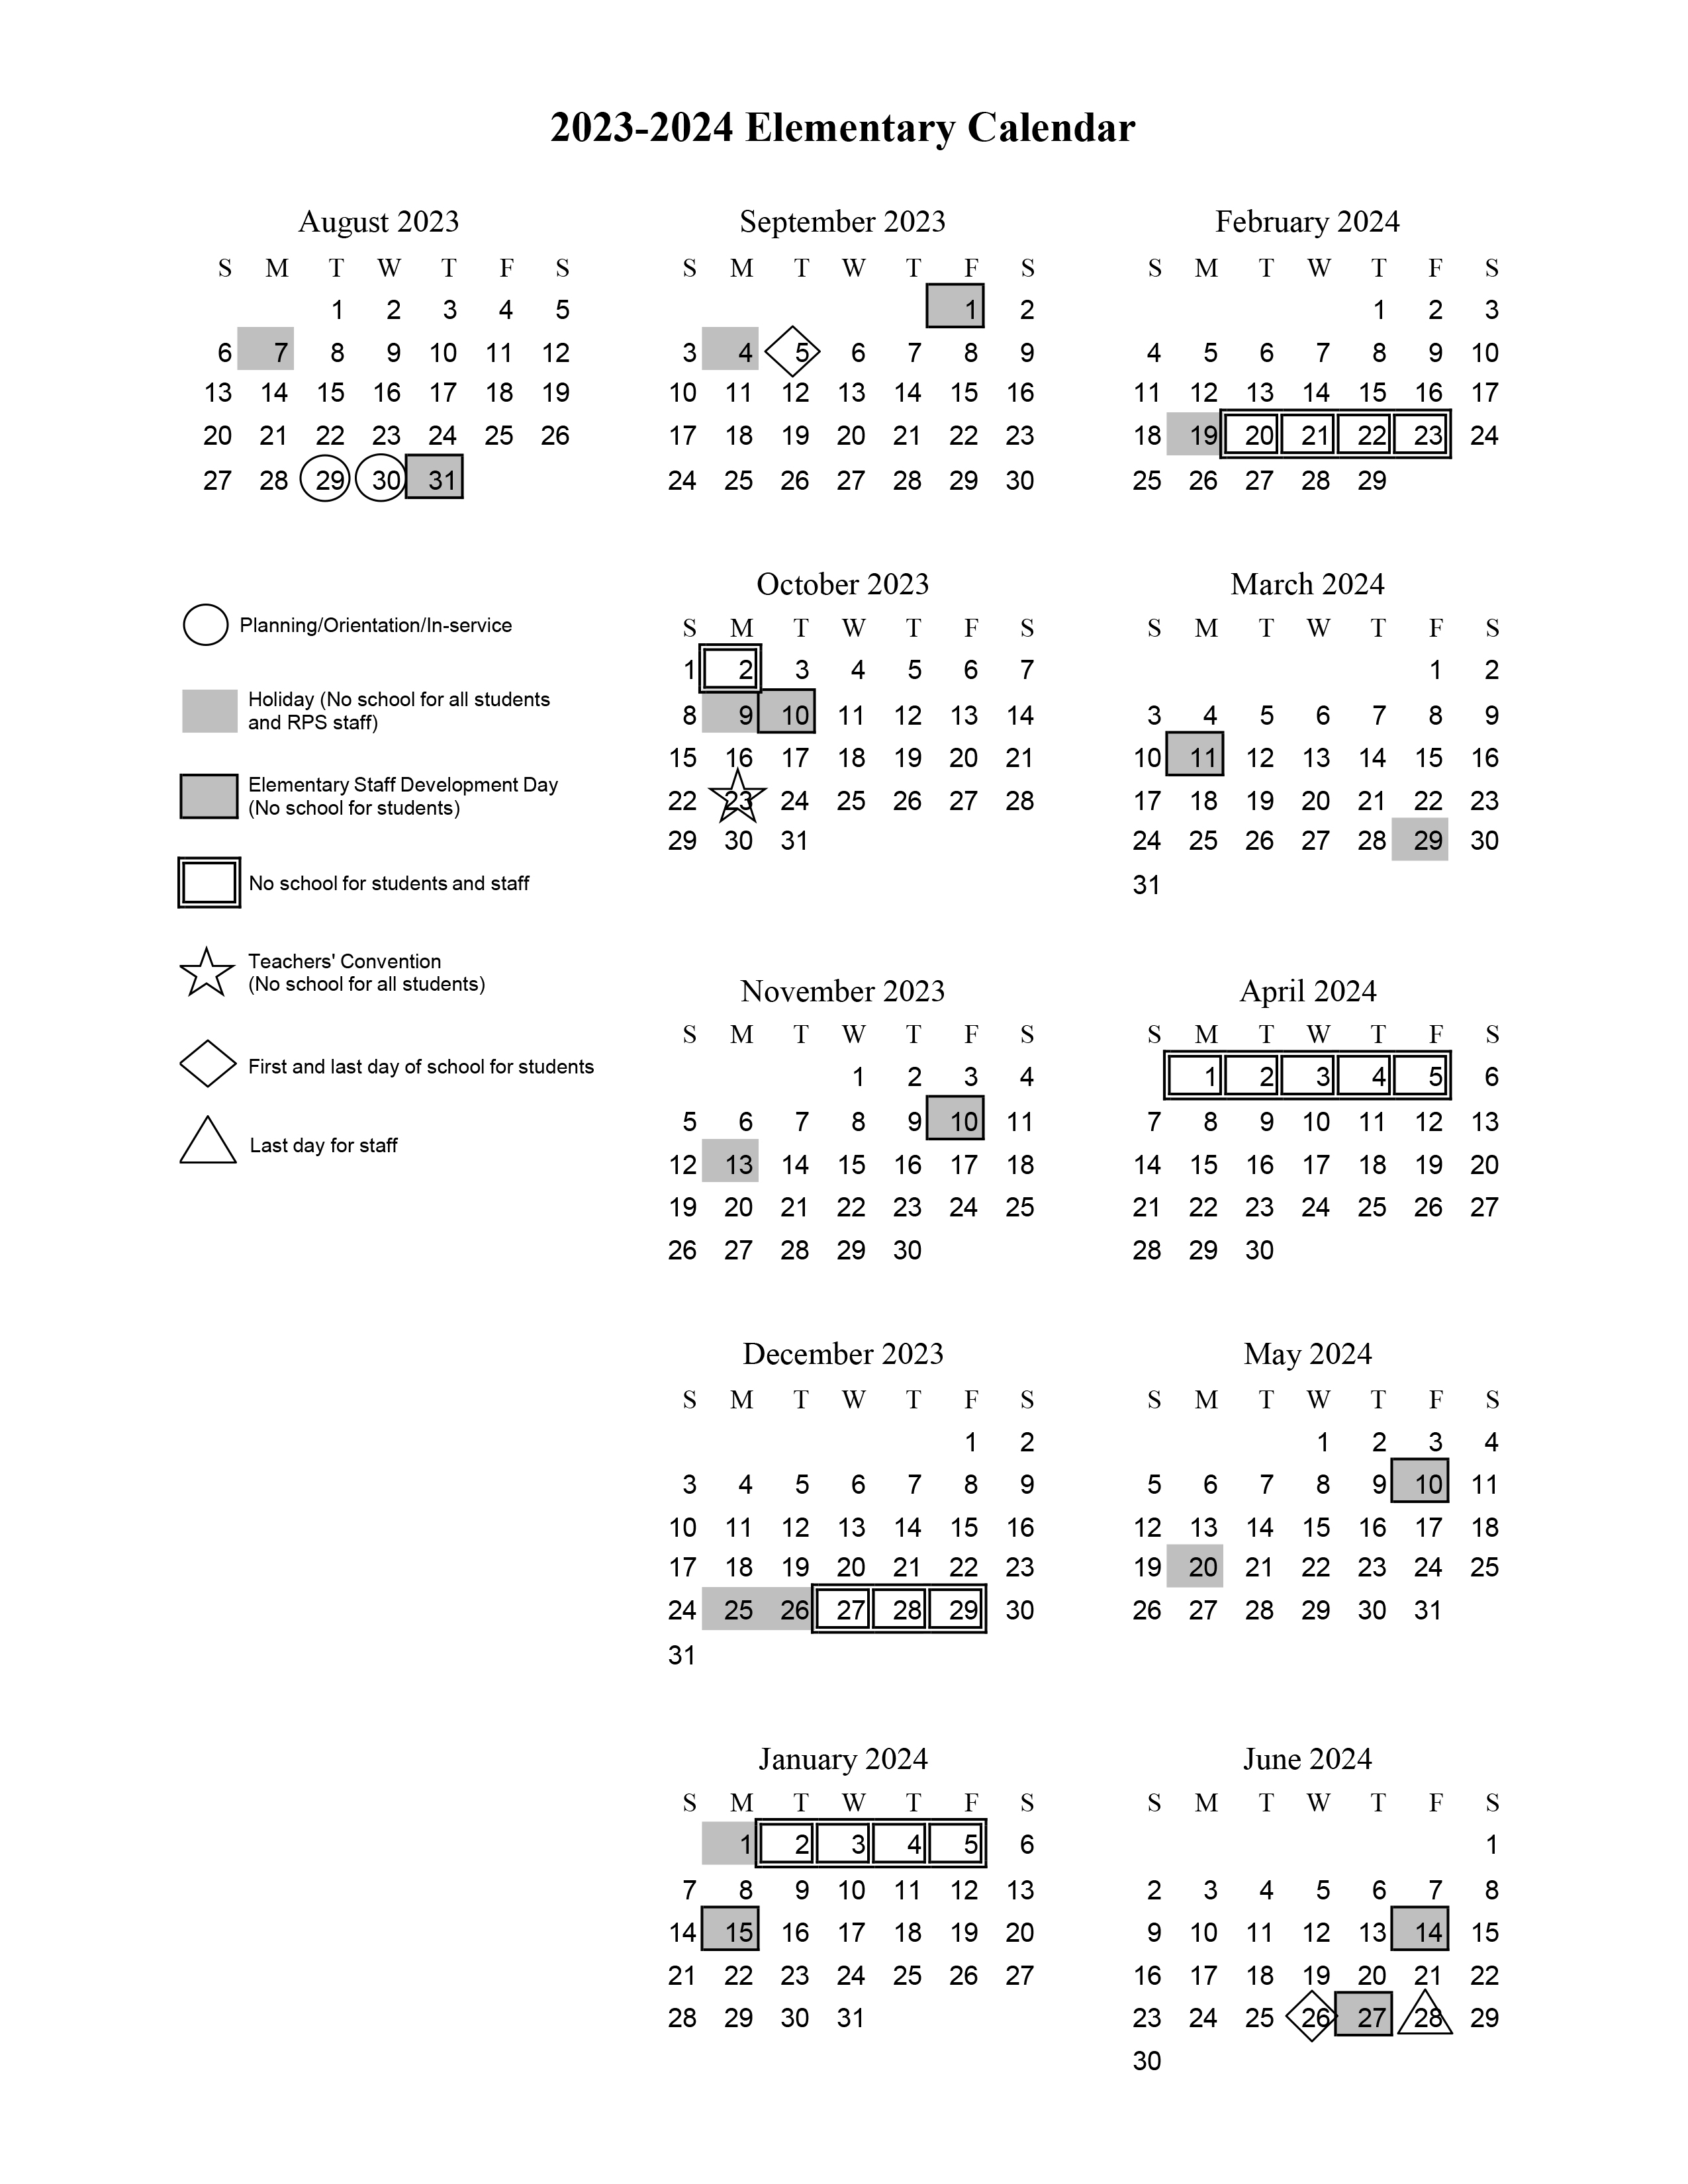 Elementary Calendar 202324 Regina Public Schools